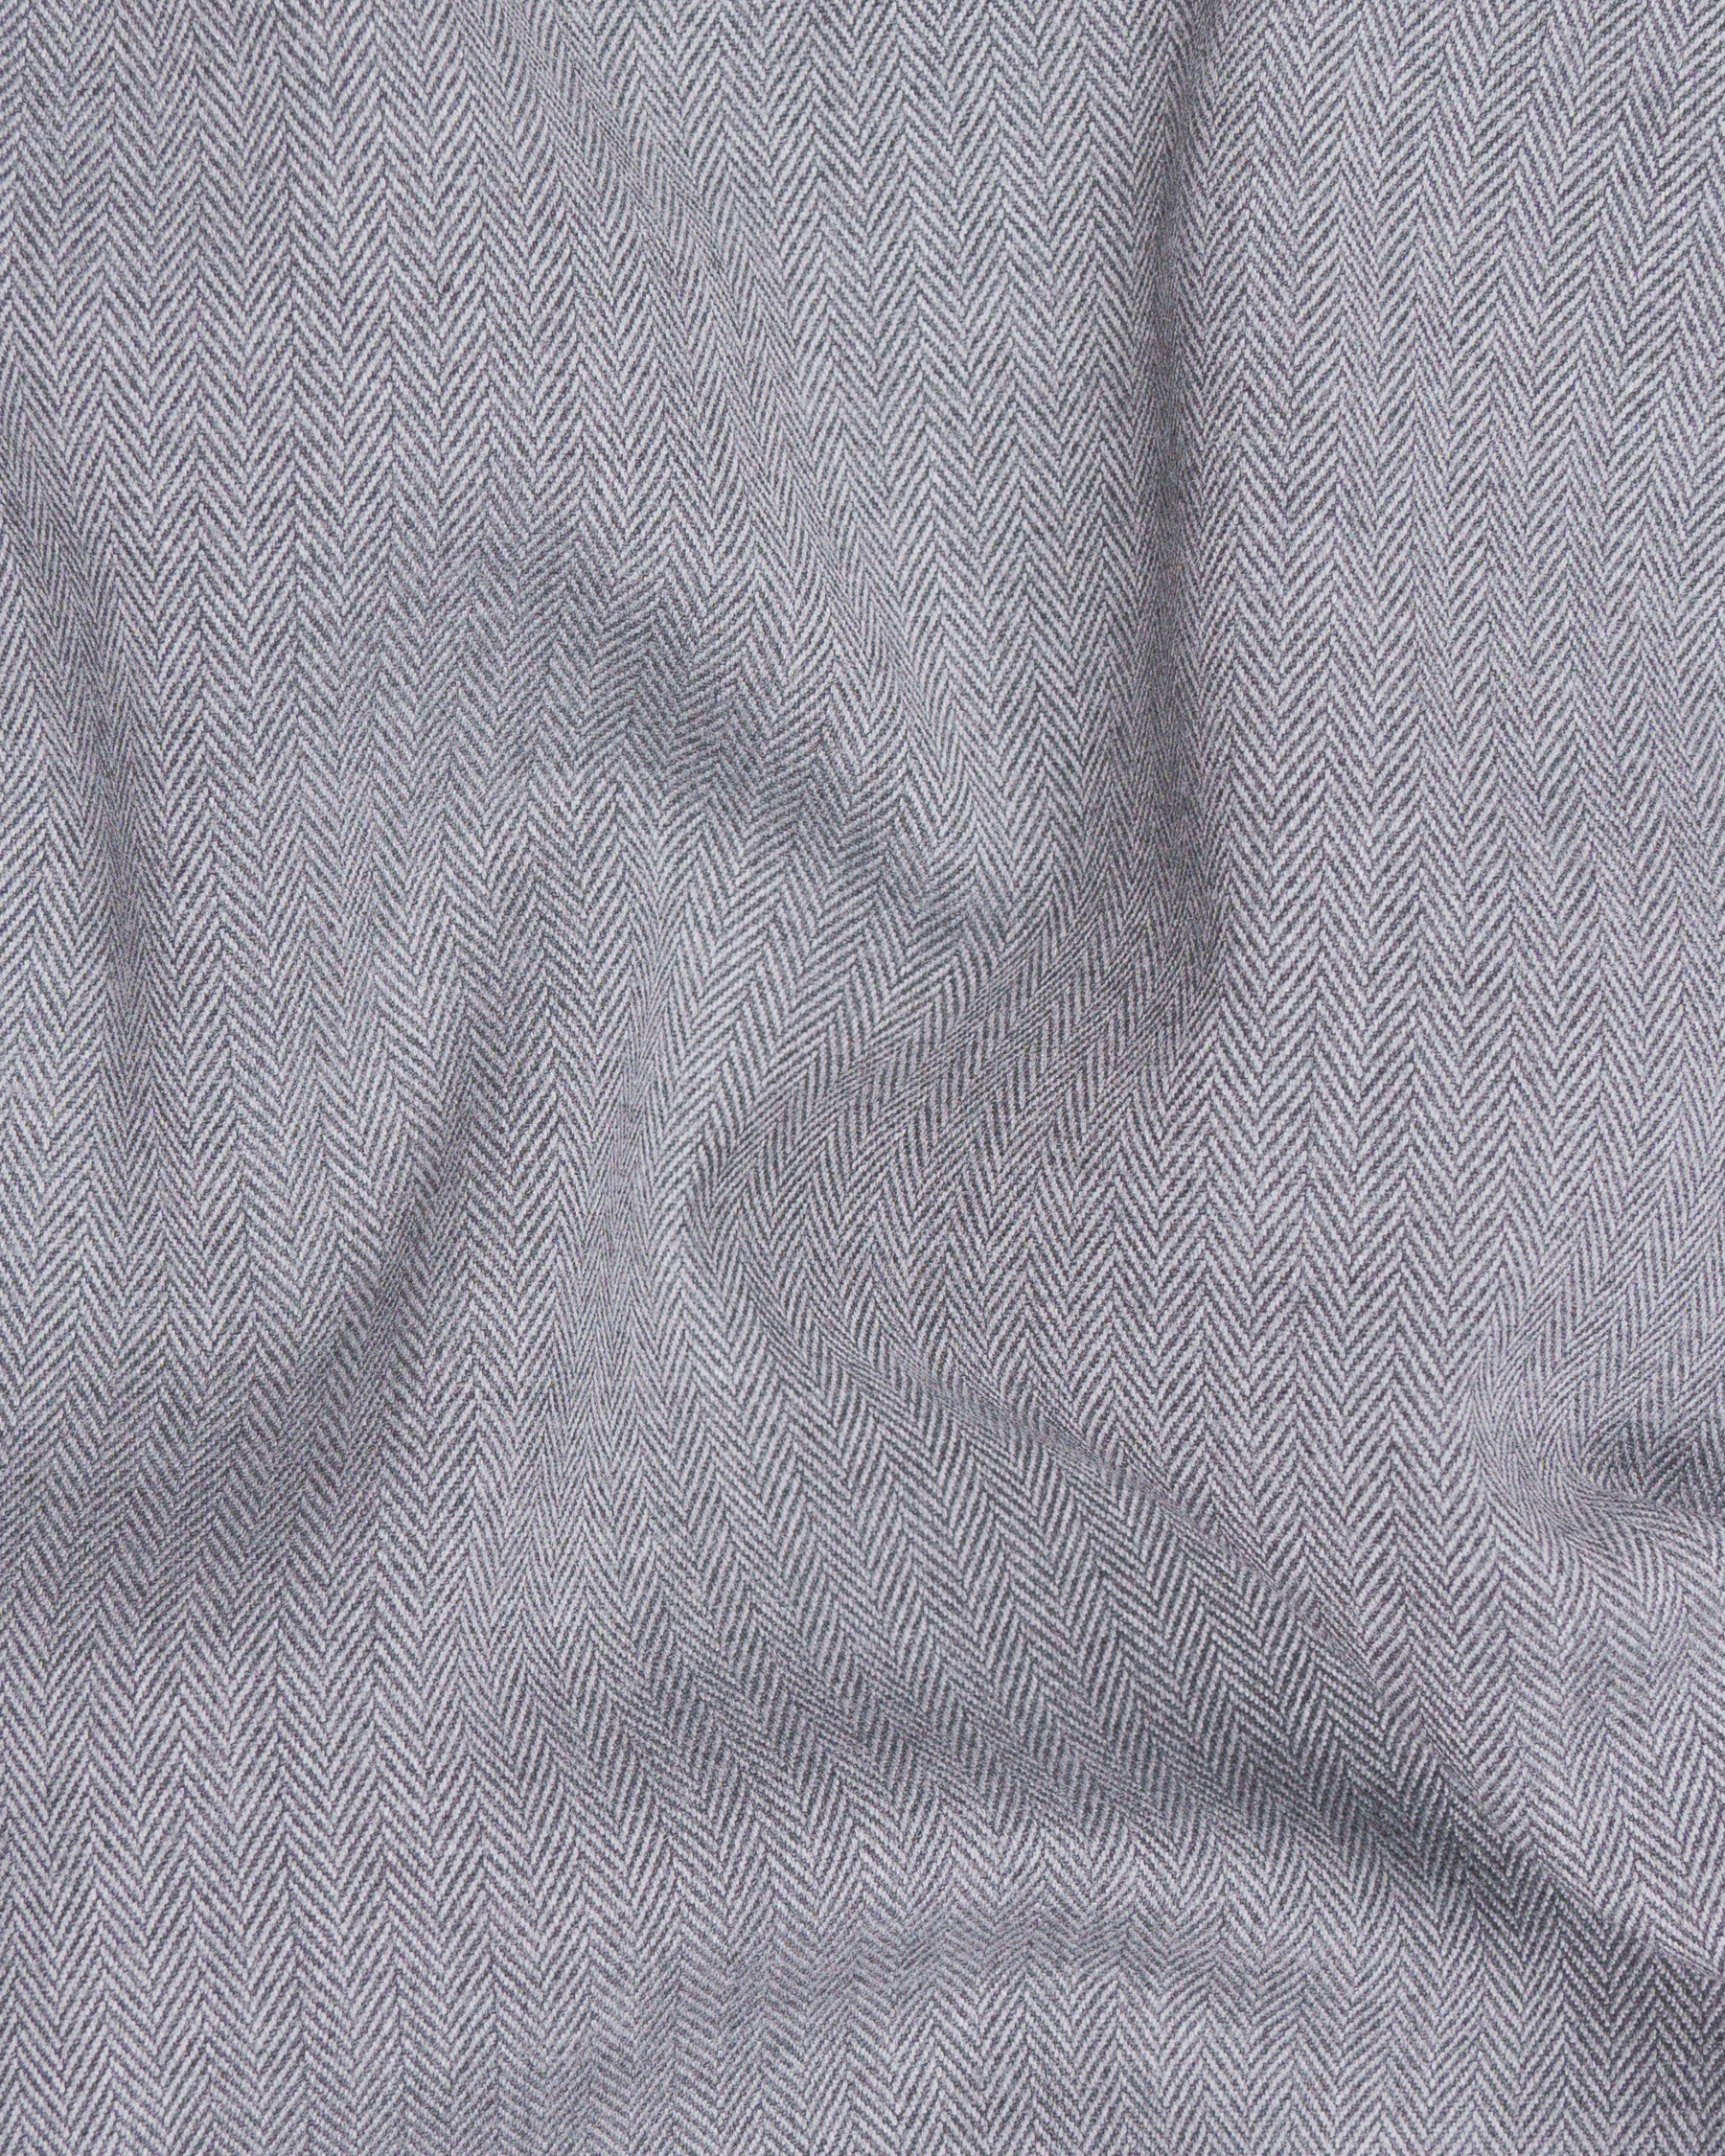 Spun Pearl Grey Herringbone Premium Cotton Pant T1435-28, T1435-30, T1435-32, T1435-34, T1435-36, T1435-38, T1435-40, T1435-42, T1435-44